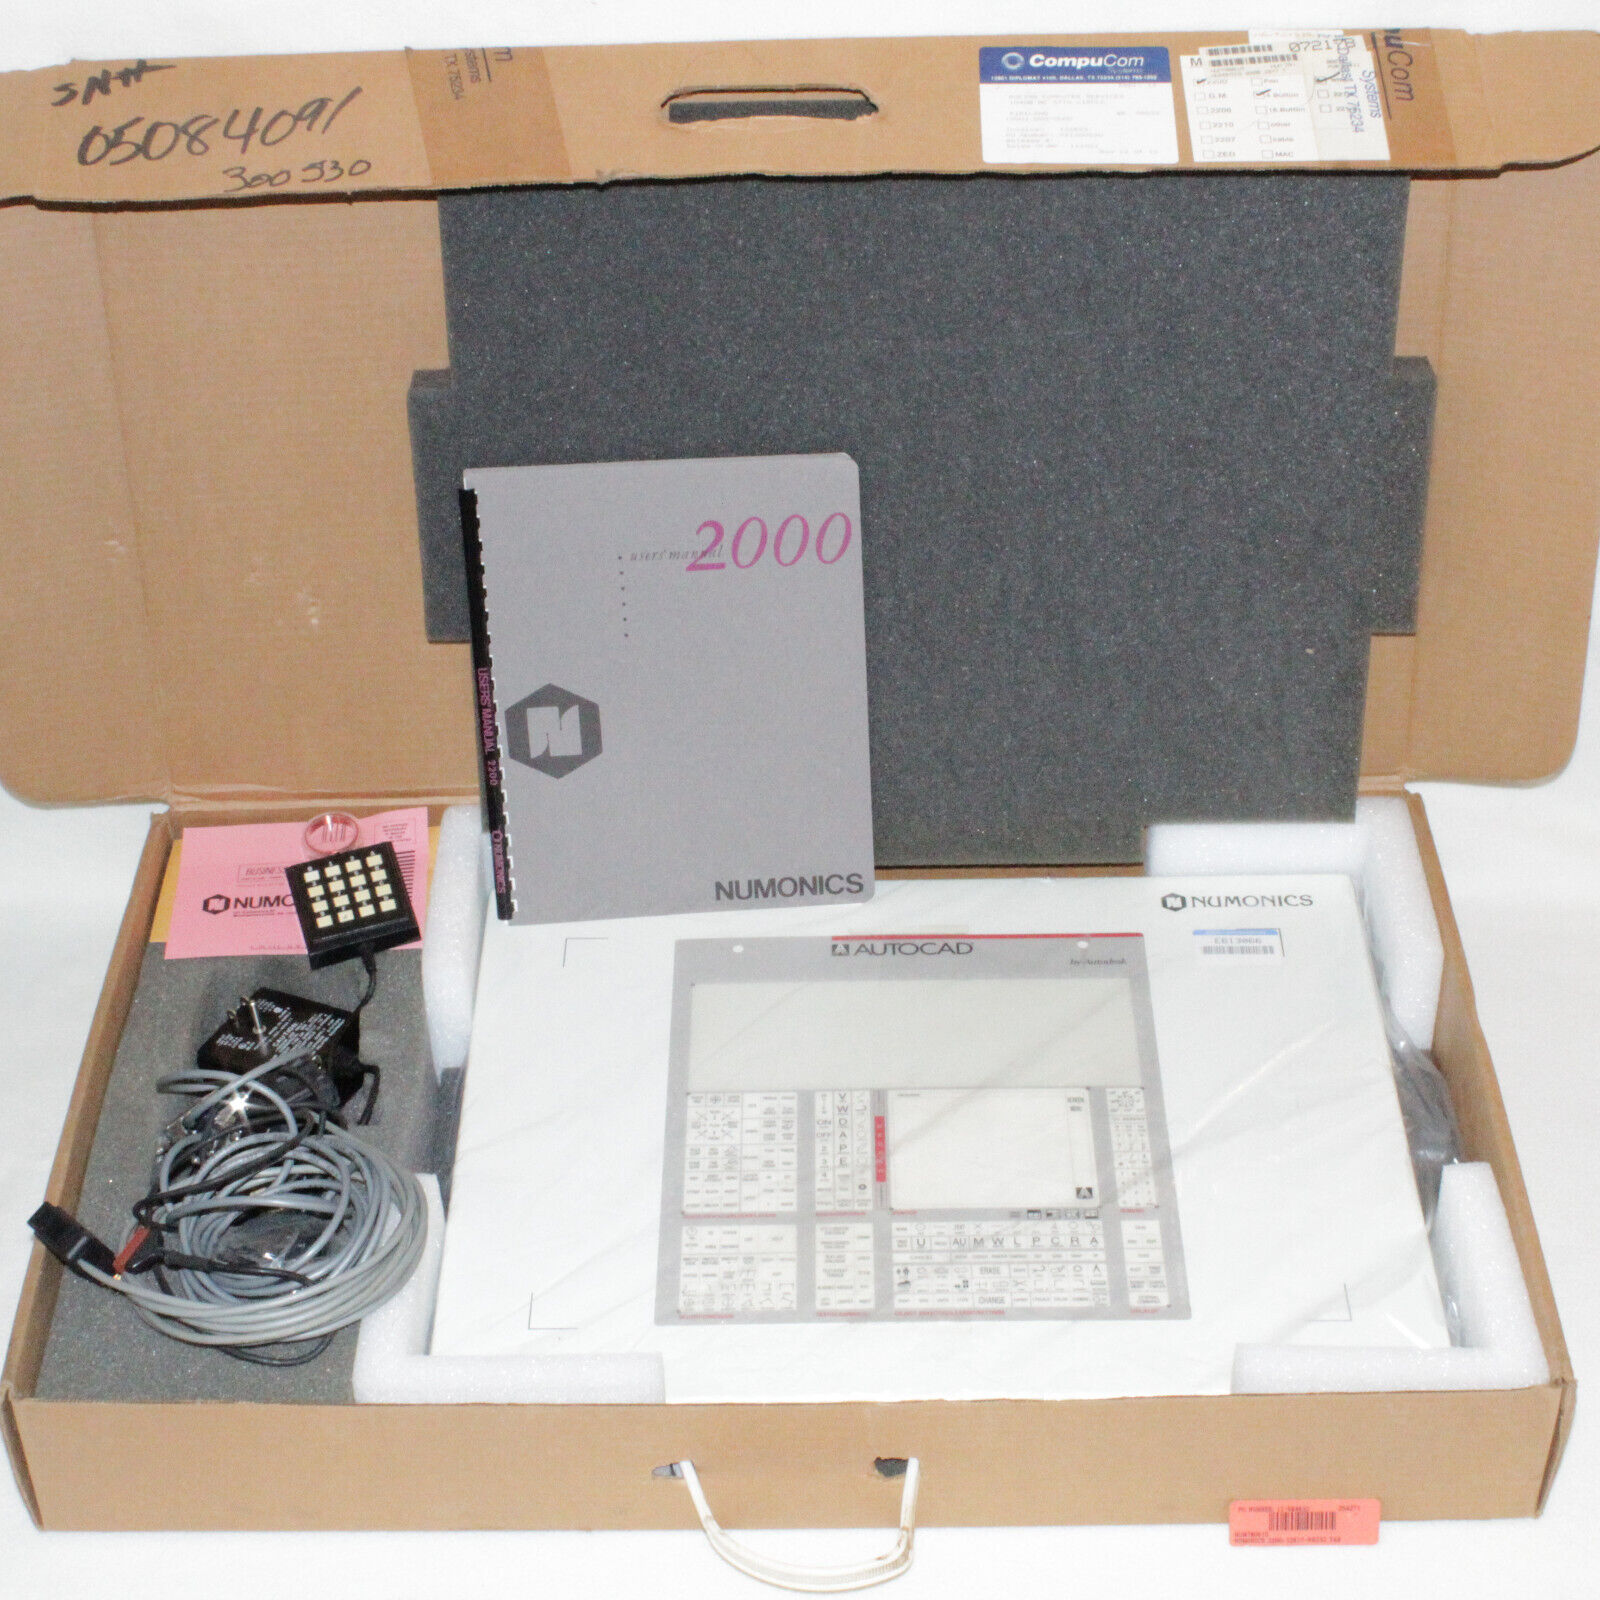 NUMONICS TABLET GRAPHIC DIGITIZER 2200 12”x17” w/ Box, Manual, 16-Button Puck+++